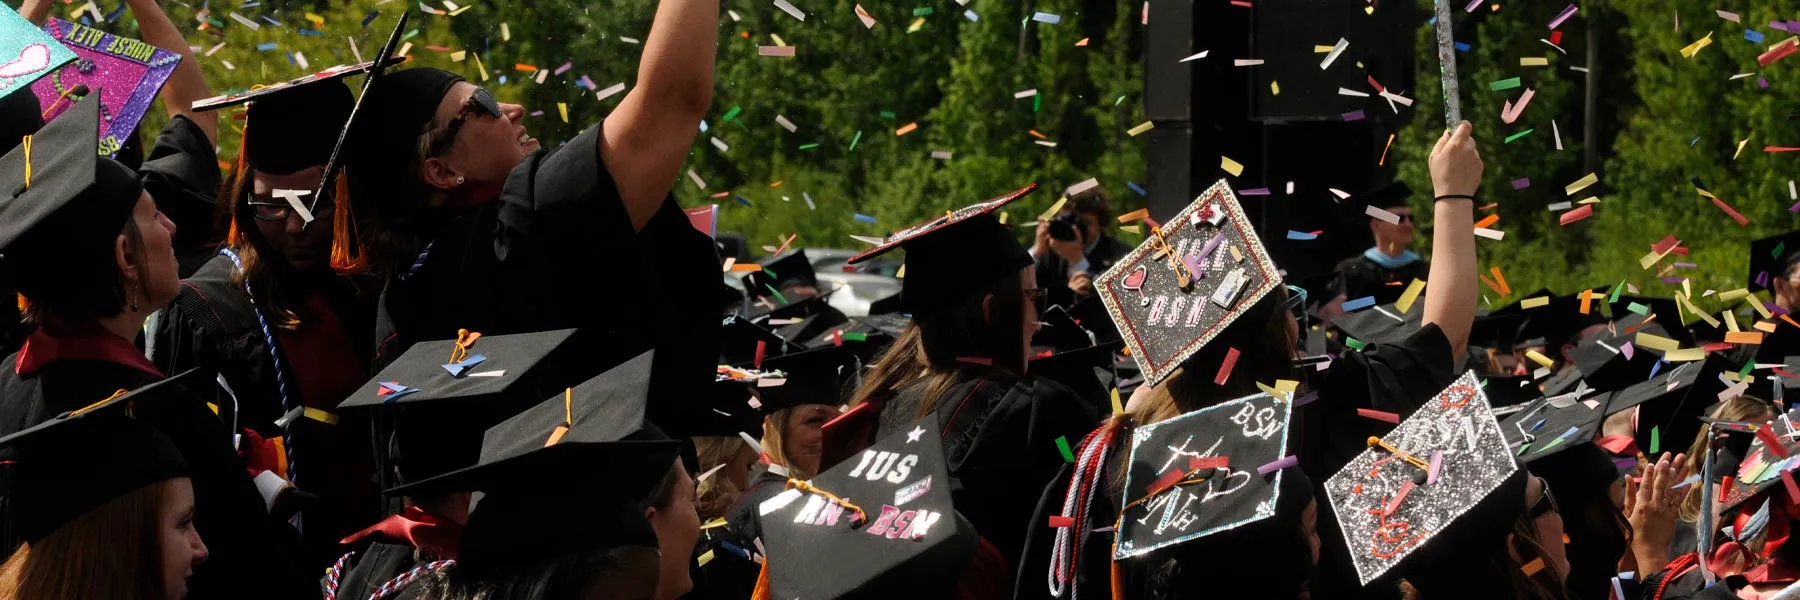 Graduates celebrating as confetti falls